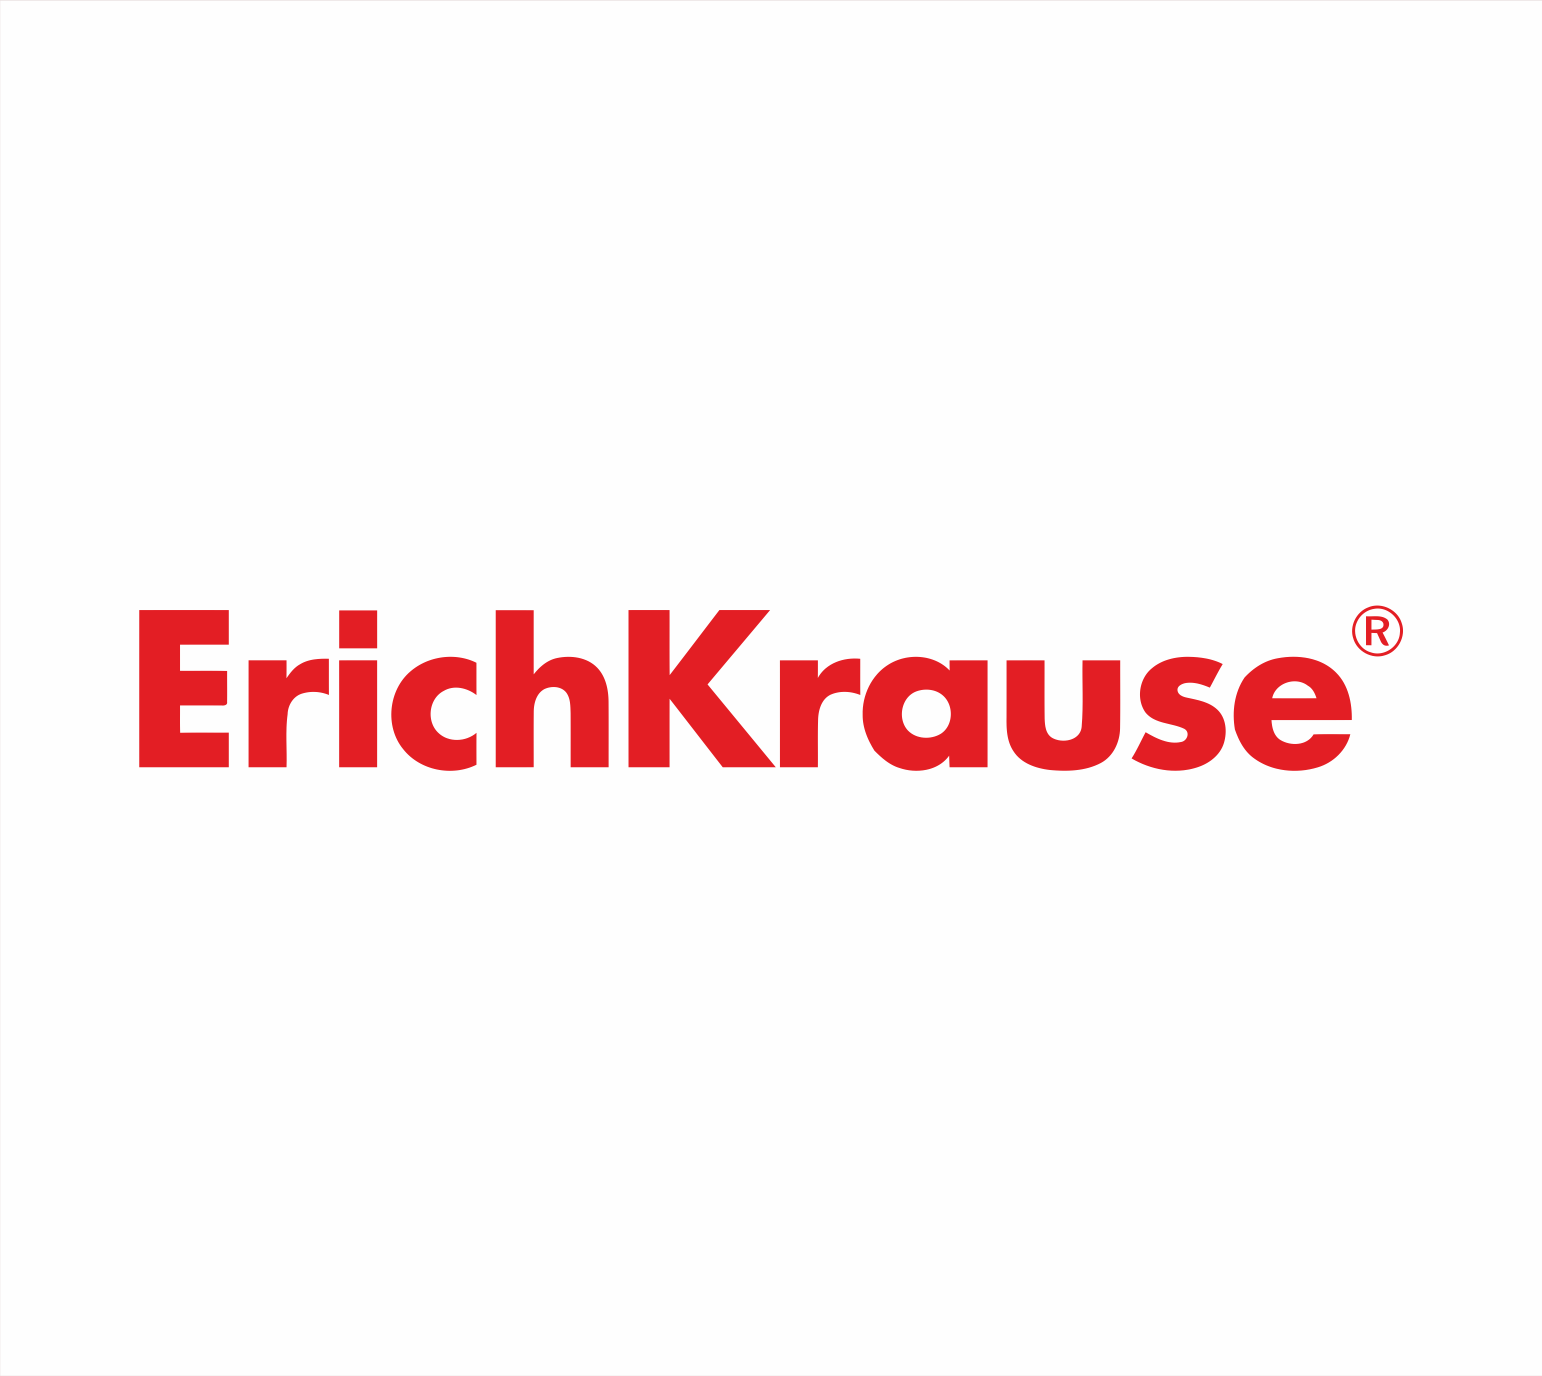 ErichKrause logo